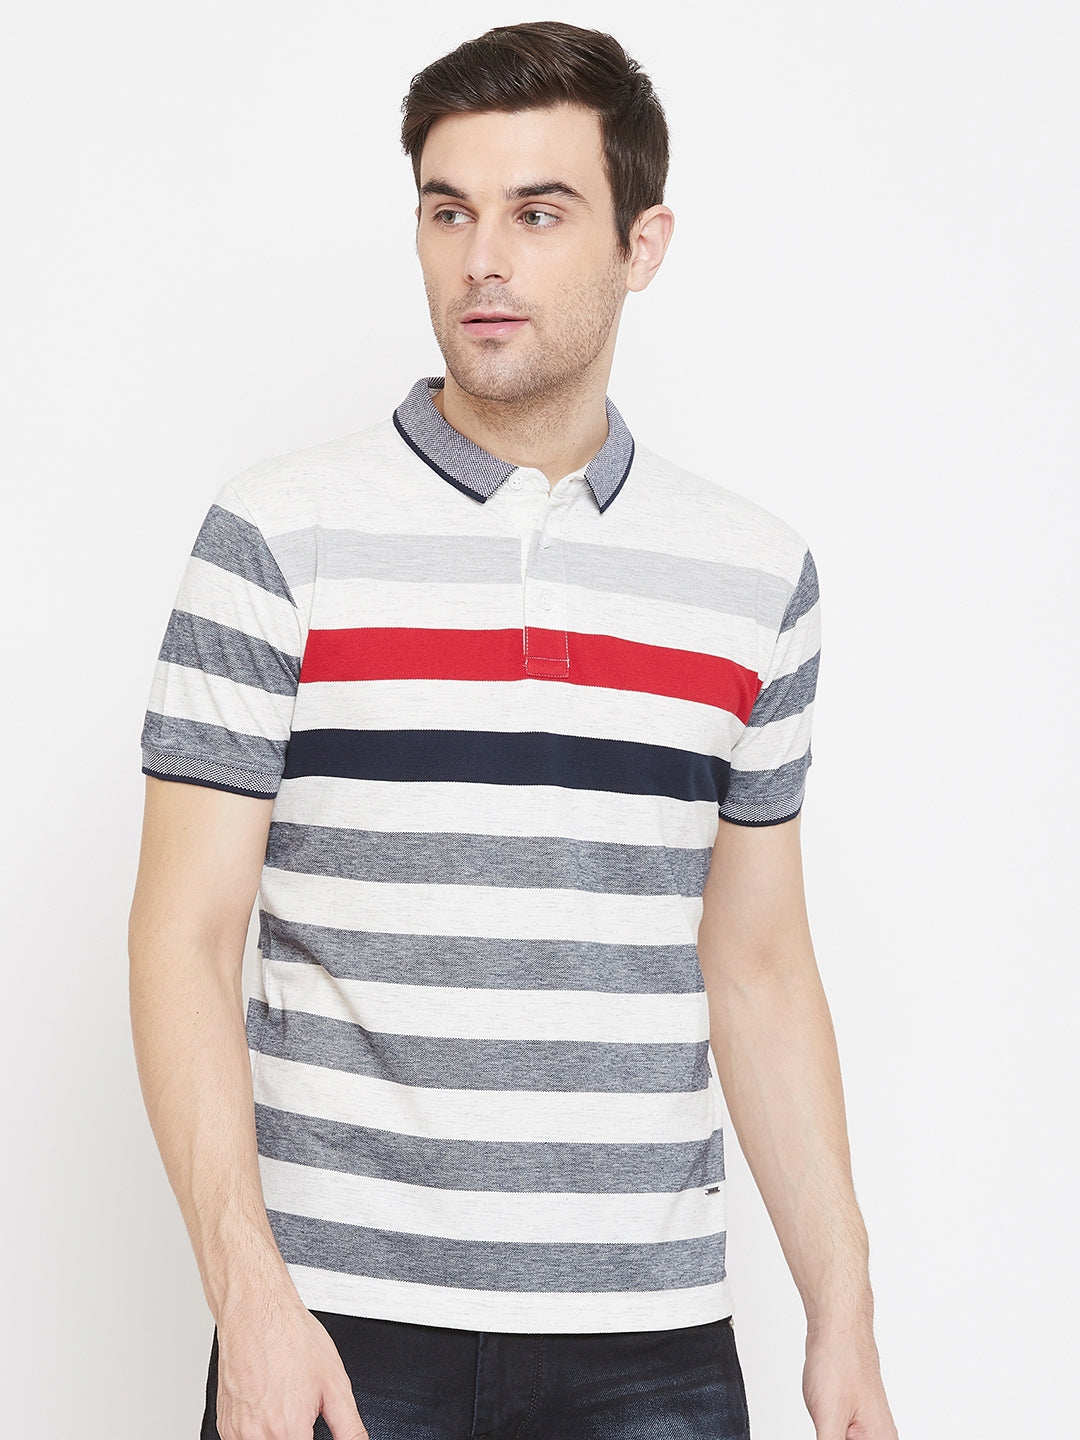 Striped T-shirt - Men T-Shirts